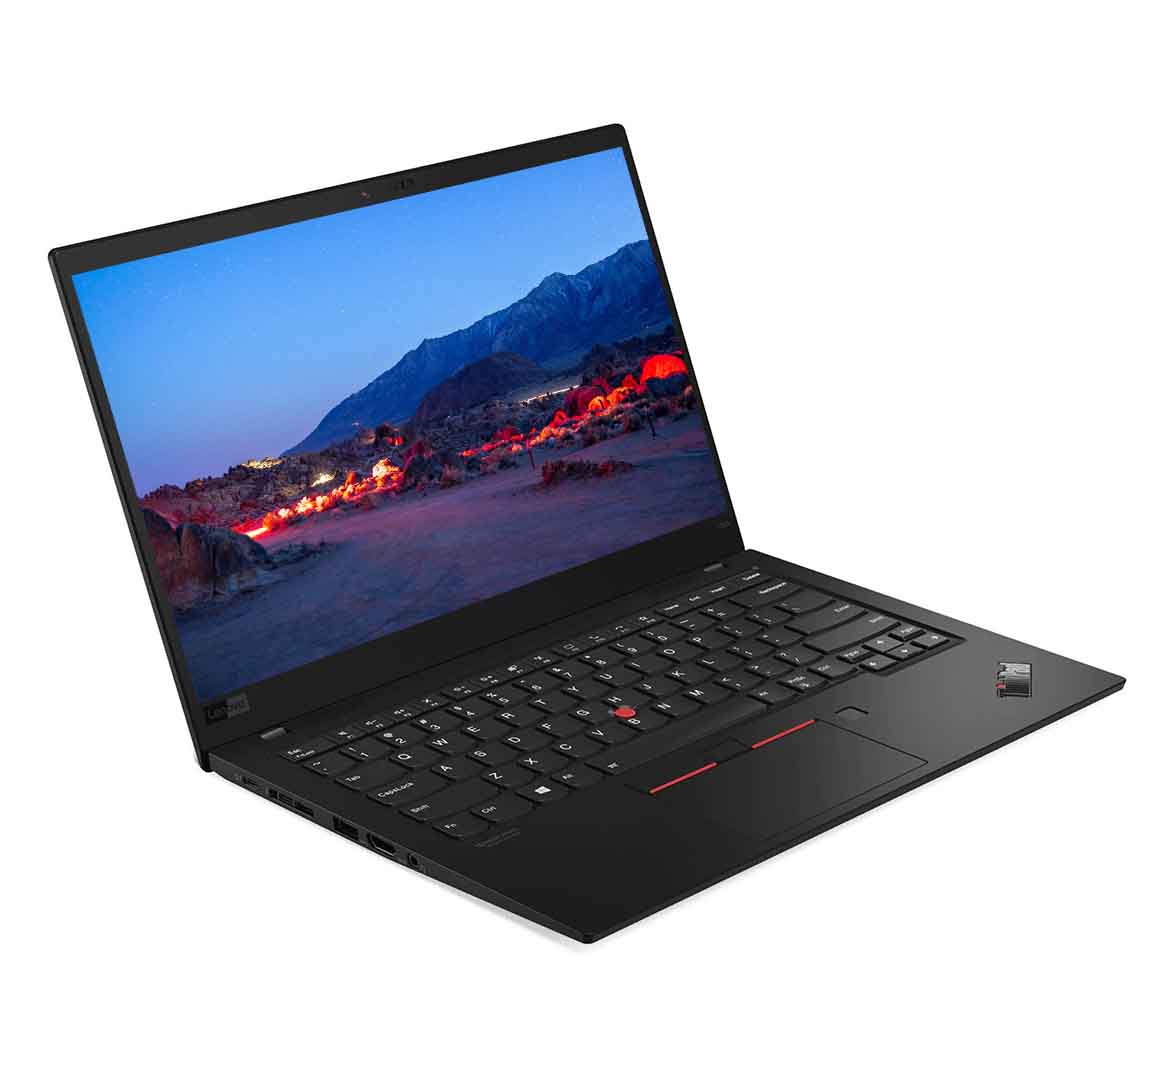 Lenovo ThinkPad X1 Carbon Business Laptop, Intel Core i5-5th Gen CPU, 8GB RAM, 256GB SSD, 14 inch Touchscreen, Windows 10